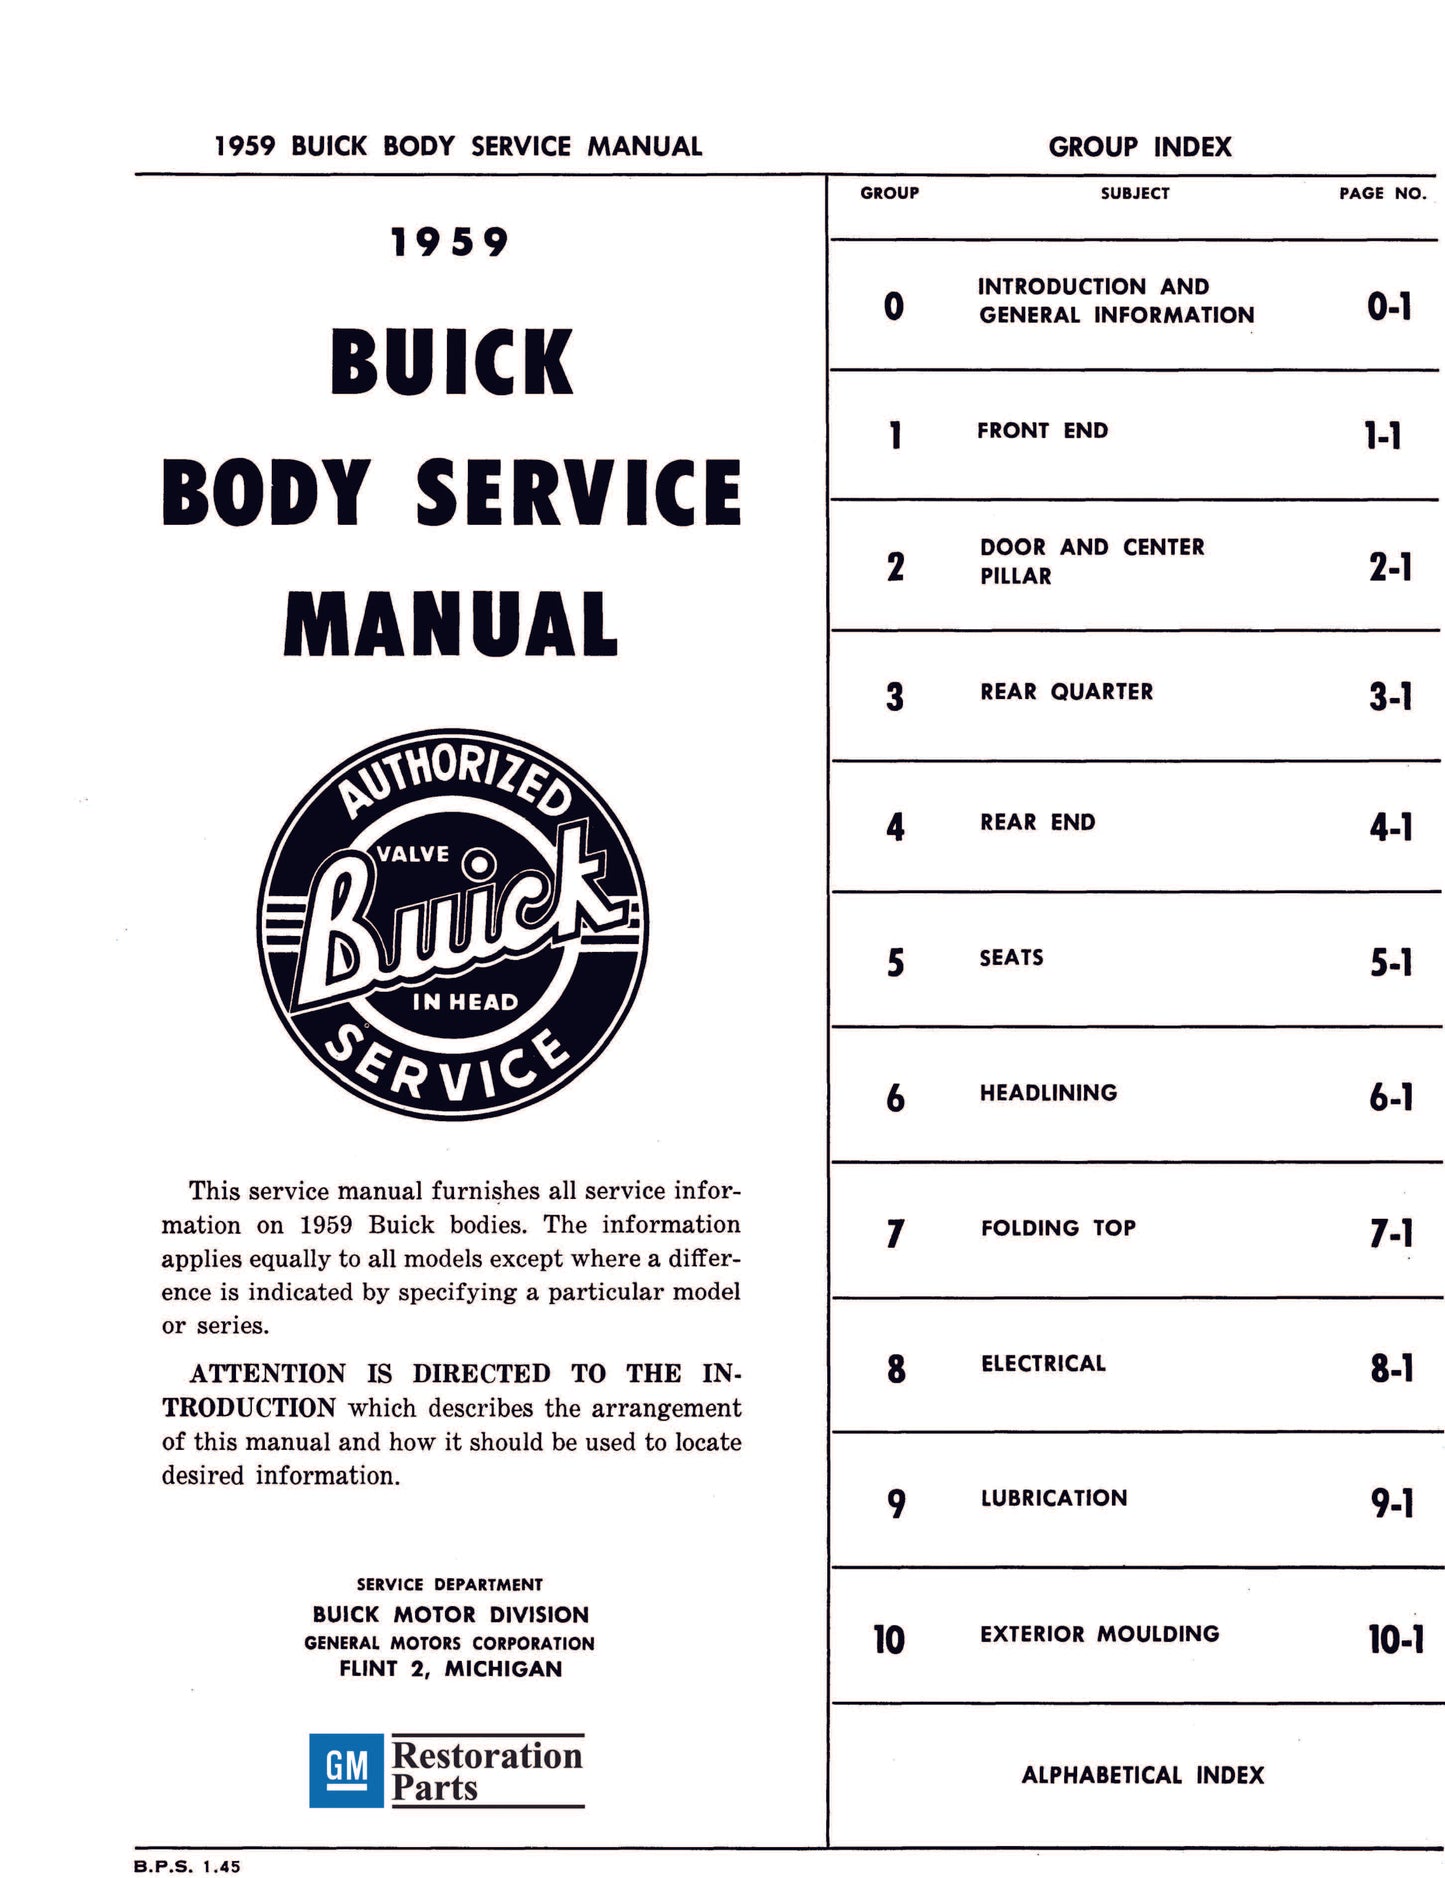 1959 Buick Repair Manual & Body Manual - All Models